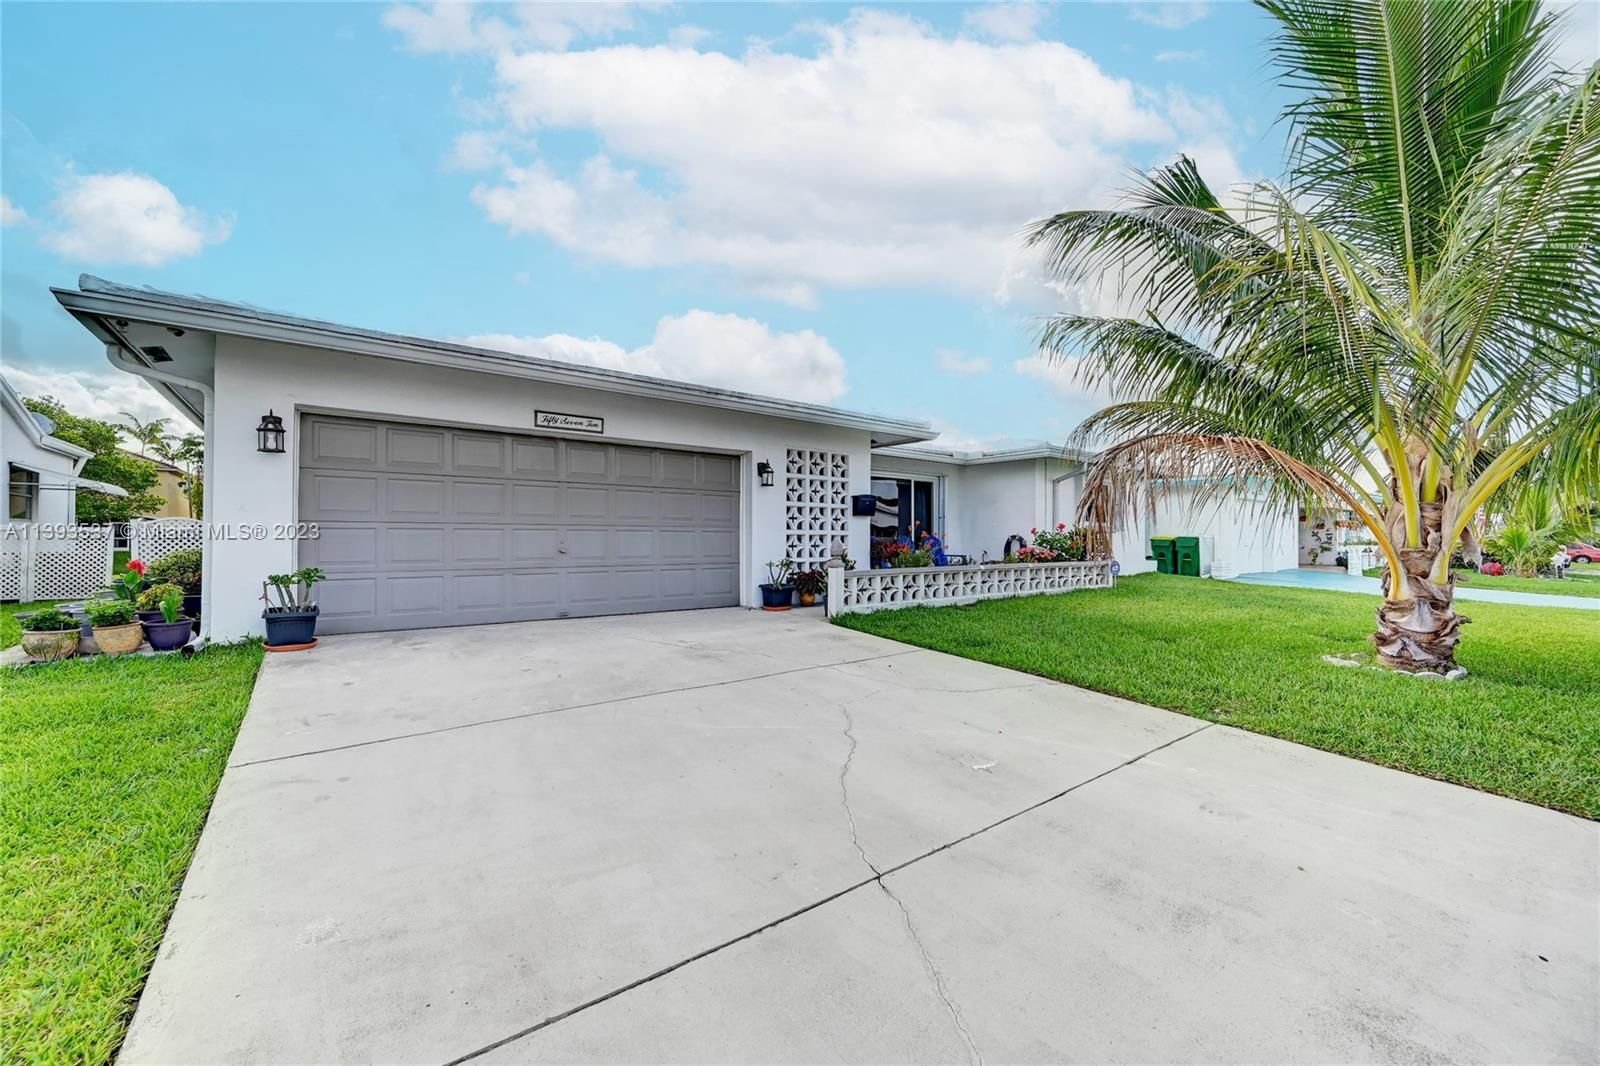 Real estate property located at 5710 81st Ave, Broward County, Tamarac, FL